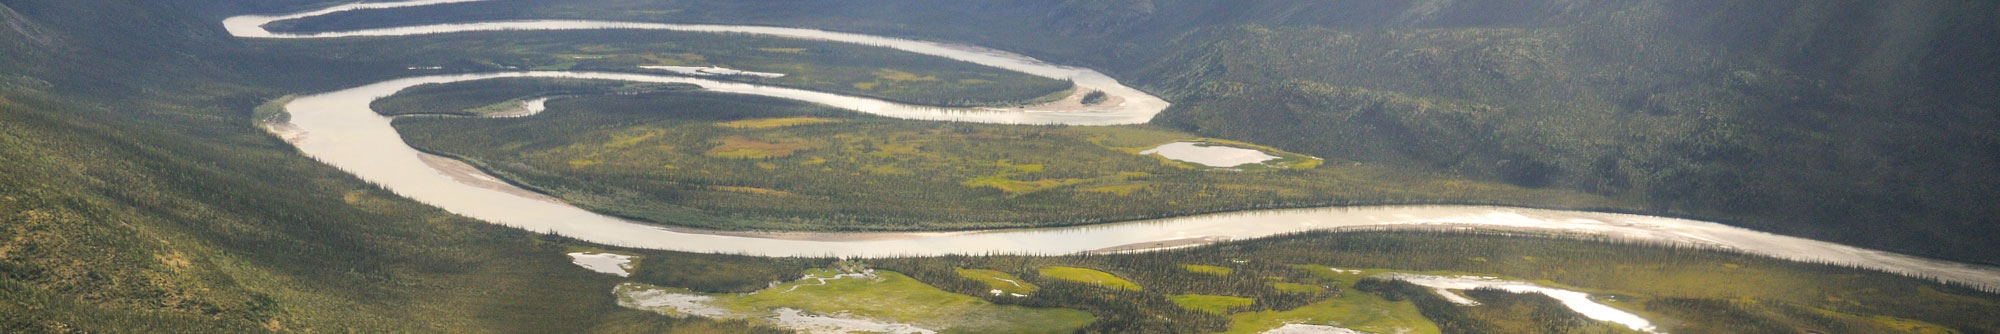 Alatna River, Gates of the Arctic.